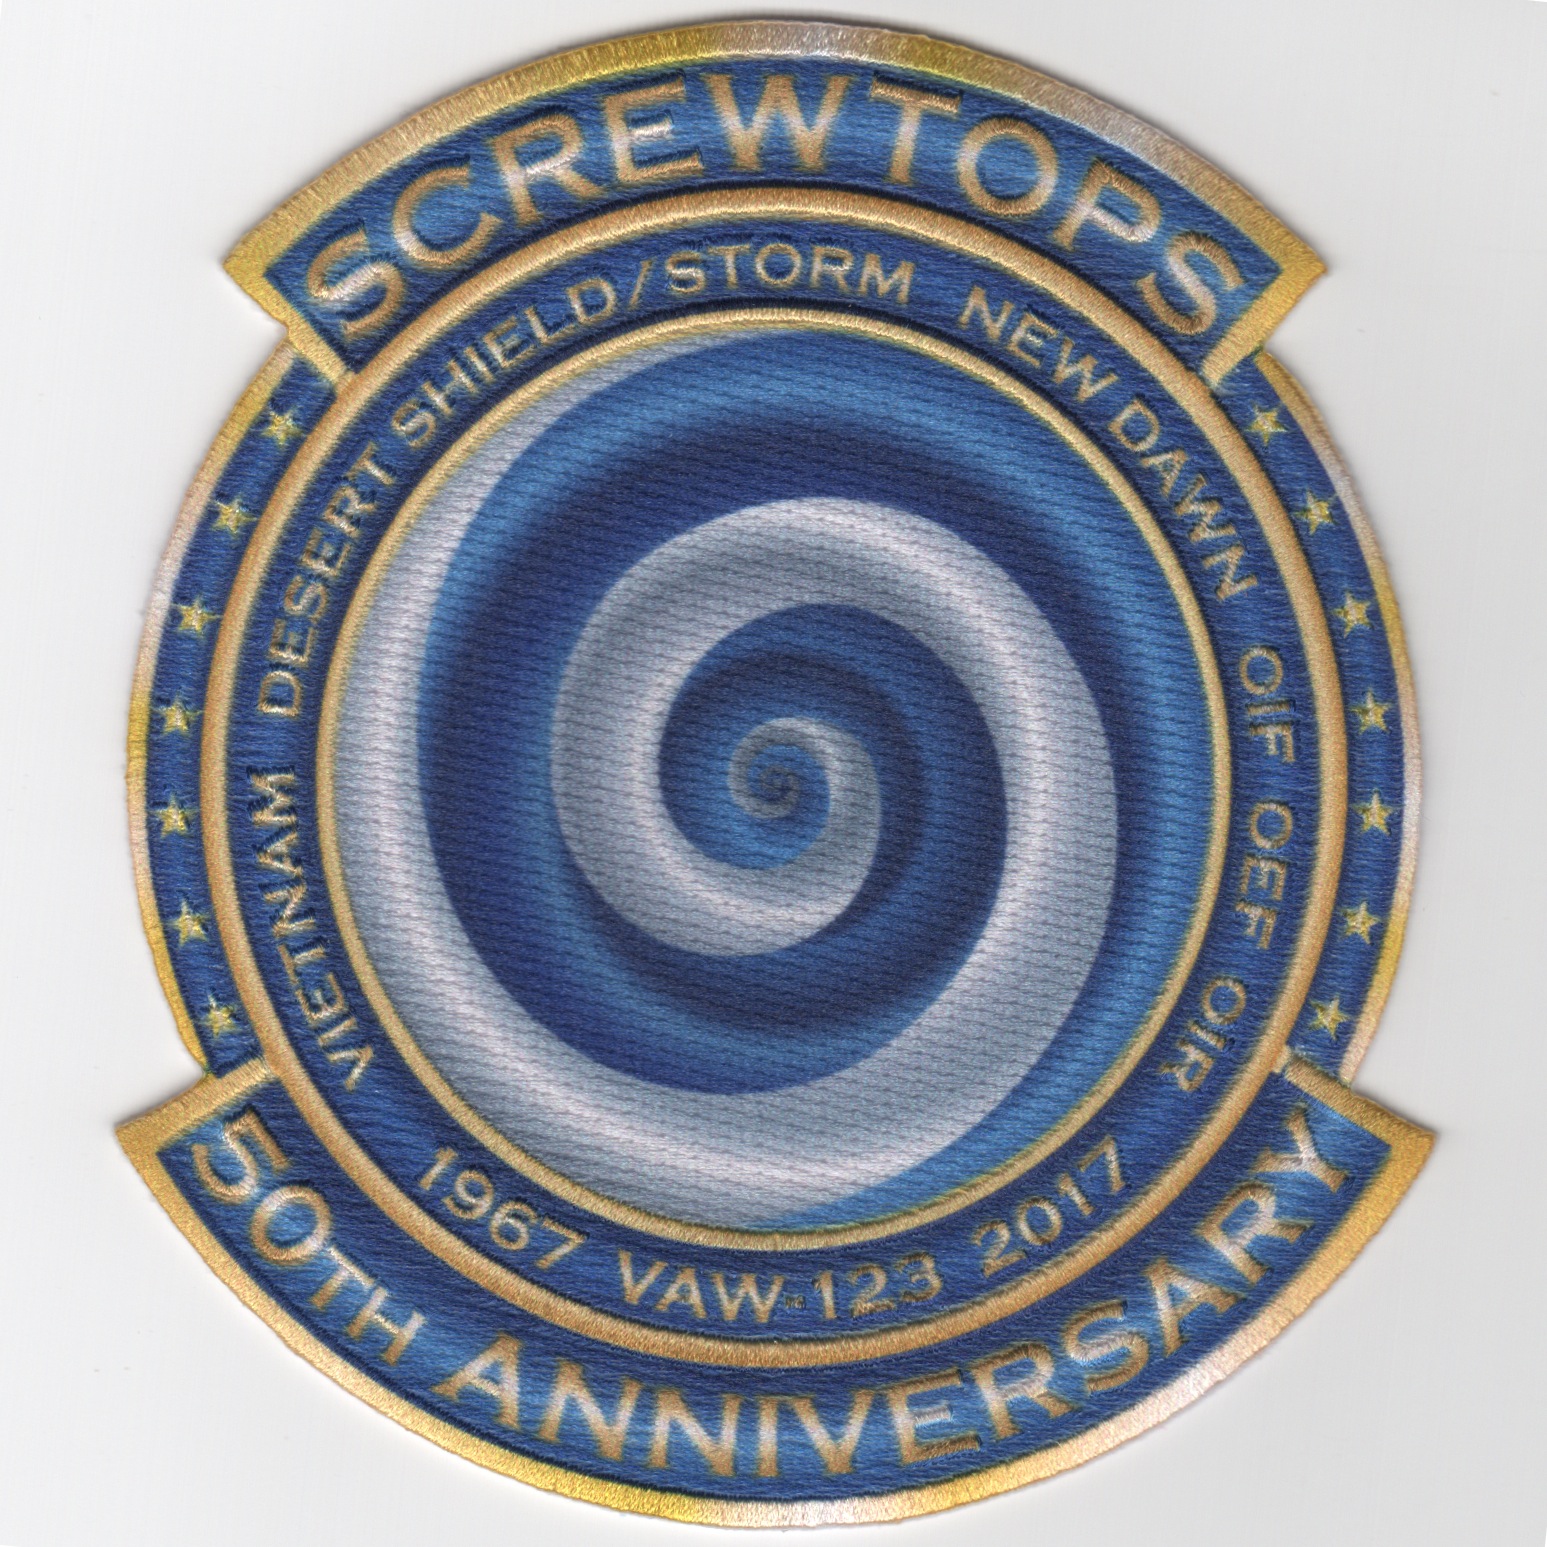 VAW-123 '50th Anniversary Swirl' Patch